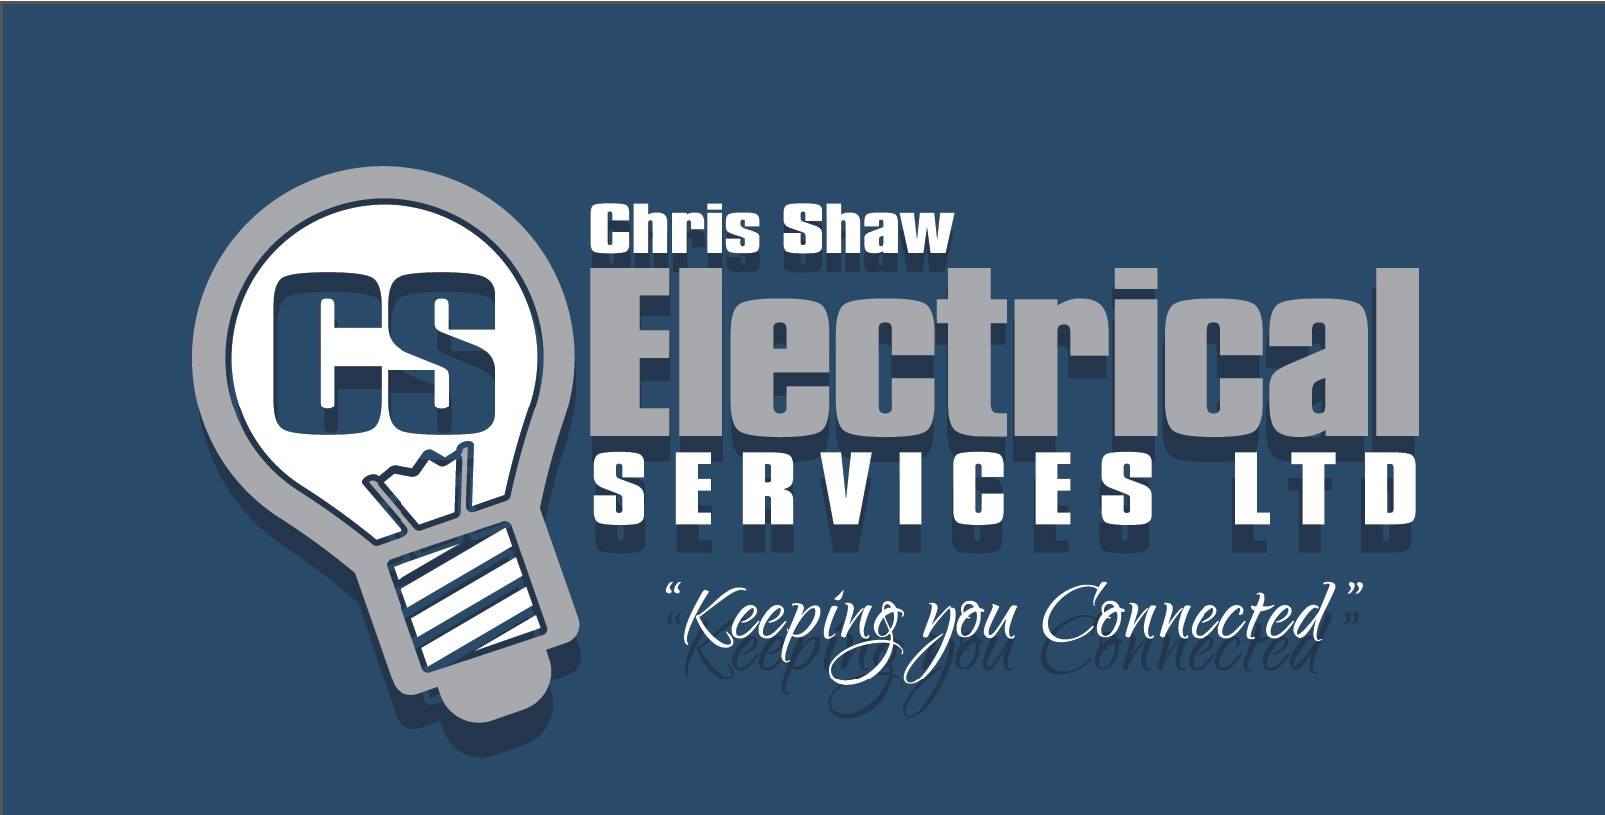 Chris Shaw Electrical Services Ltd